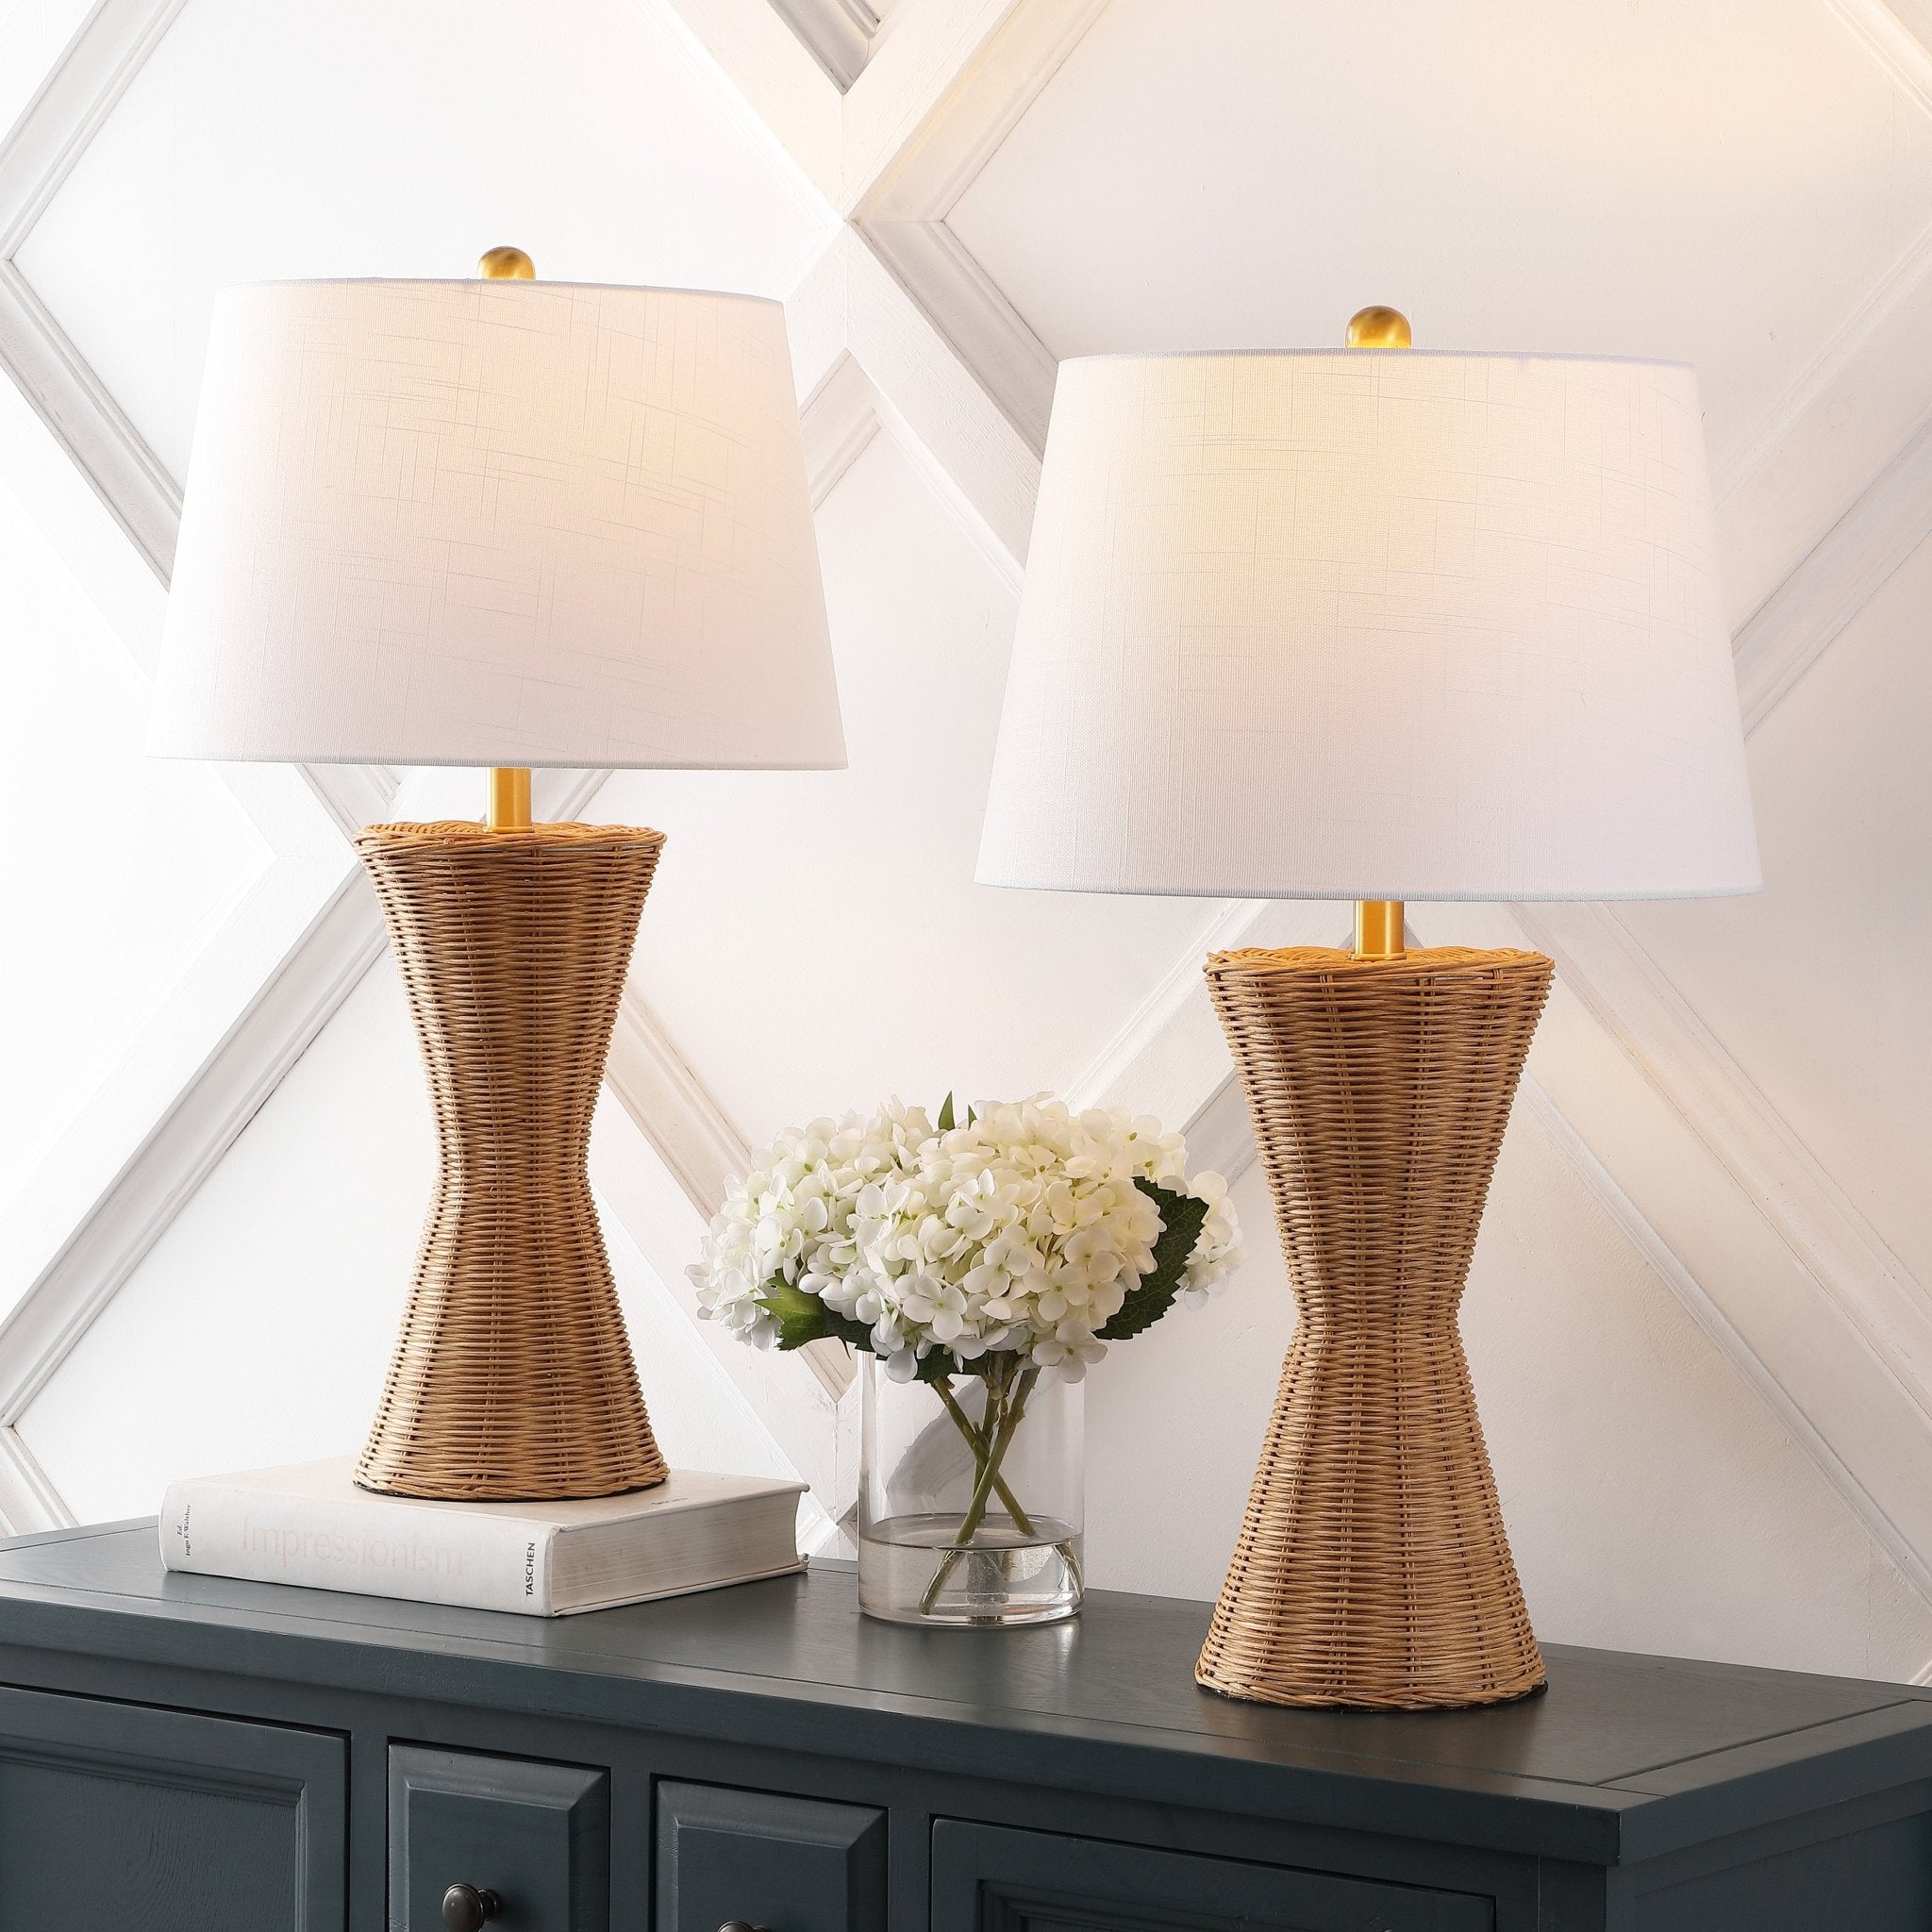 Laura-Coastal-Designer-Iron/Rattan-Wicker-LED-Table-Lamp-Table-Lamps